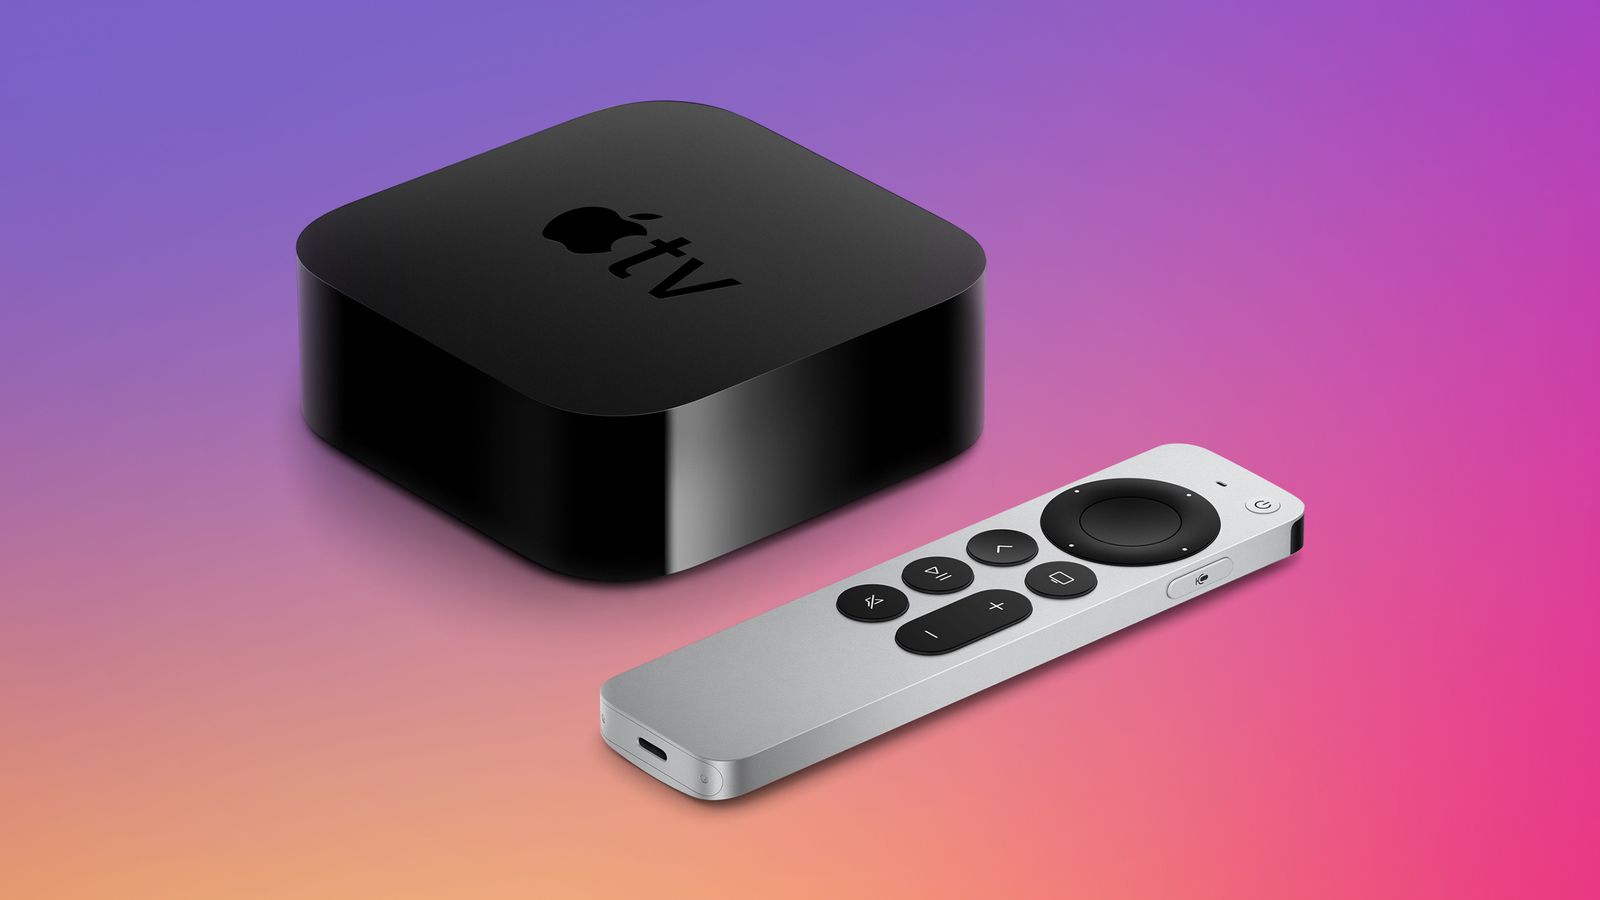 Deals: Amazon Discounts TV 4K to Lowest-Ever Price of ($29 Off) - MacRumors